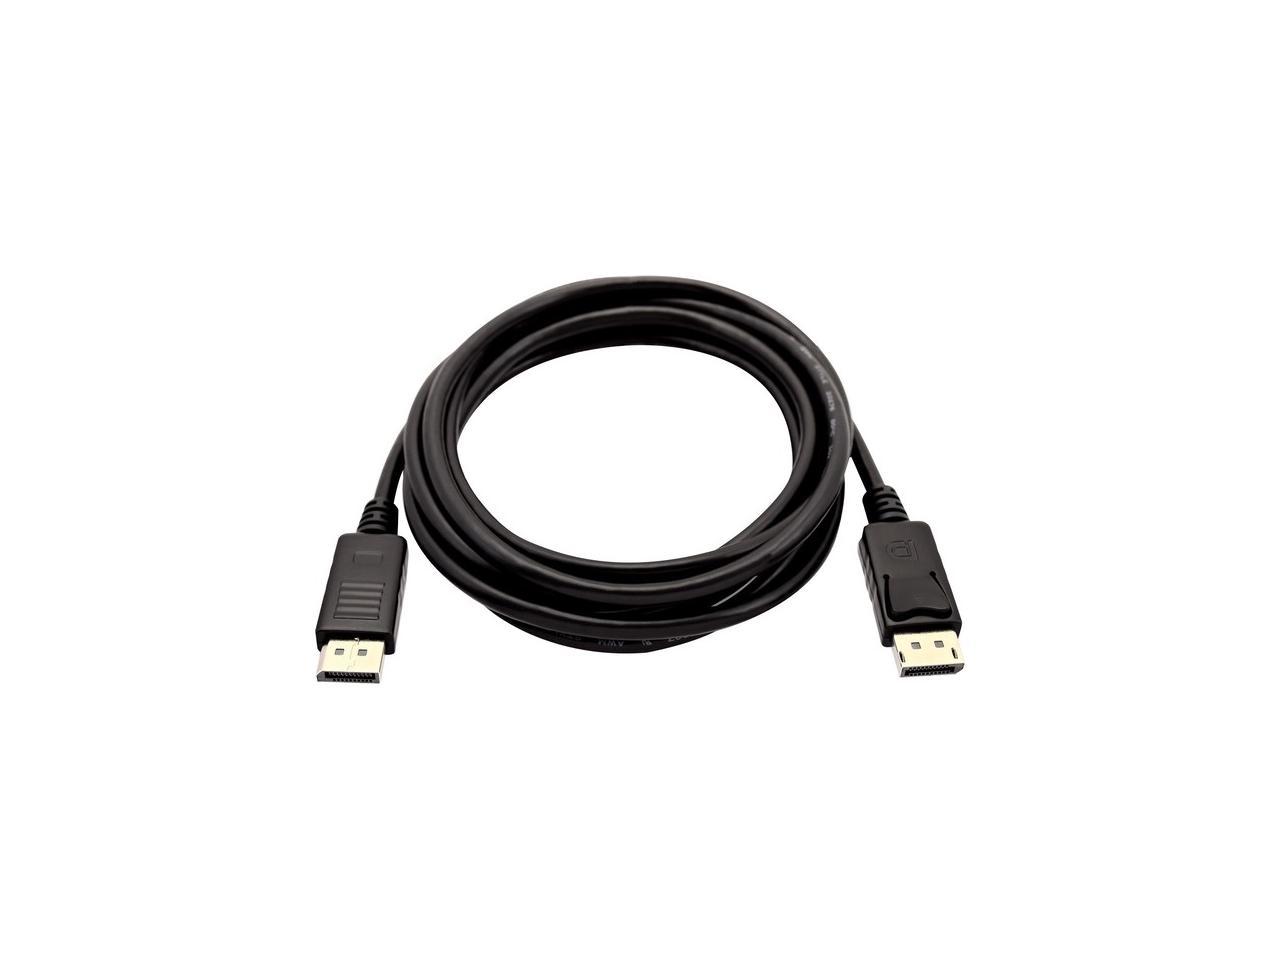 V7 Black Video Cable Mini DisplayPort Male to DisplayPort Male 1m 3.3ft